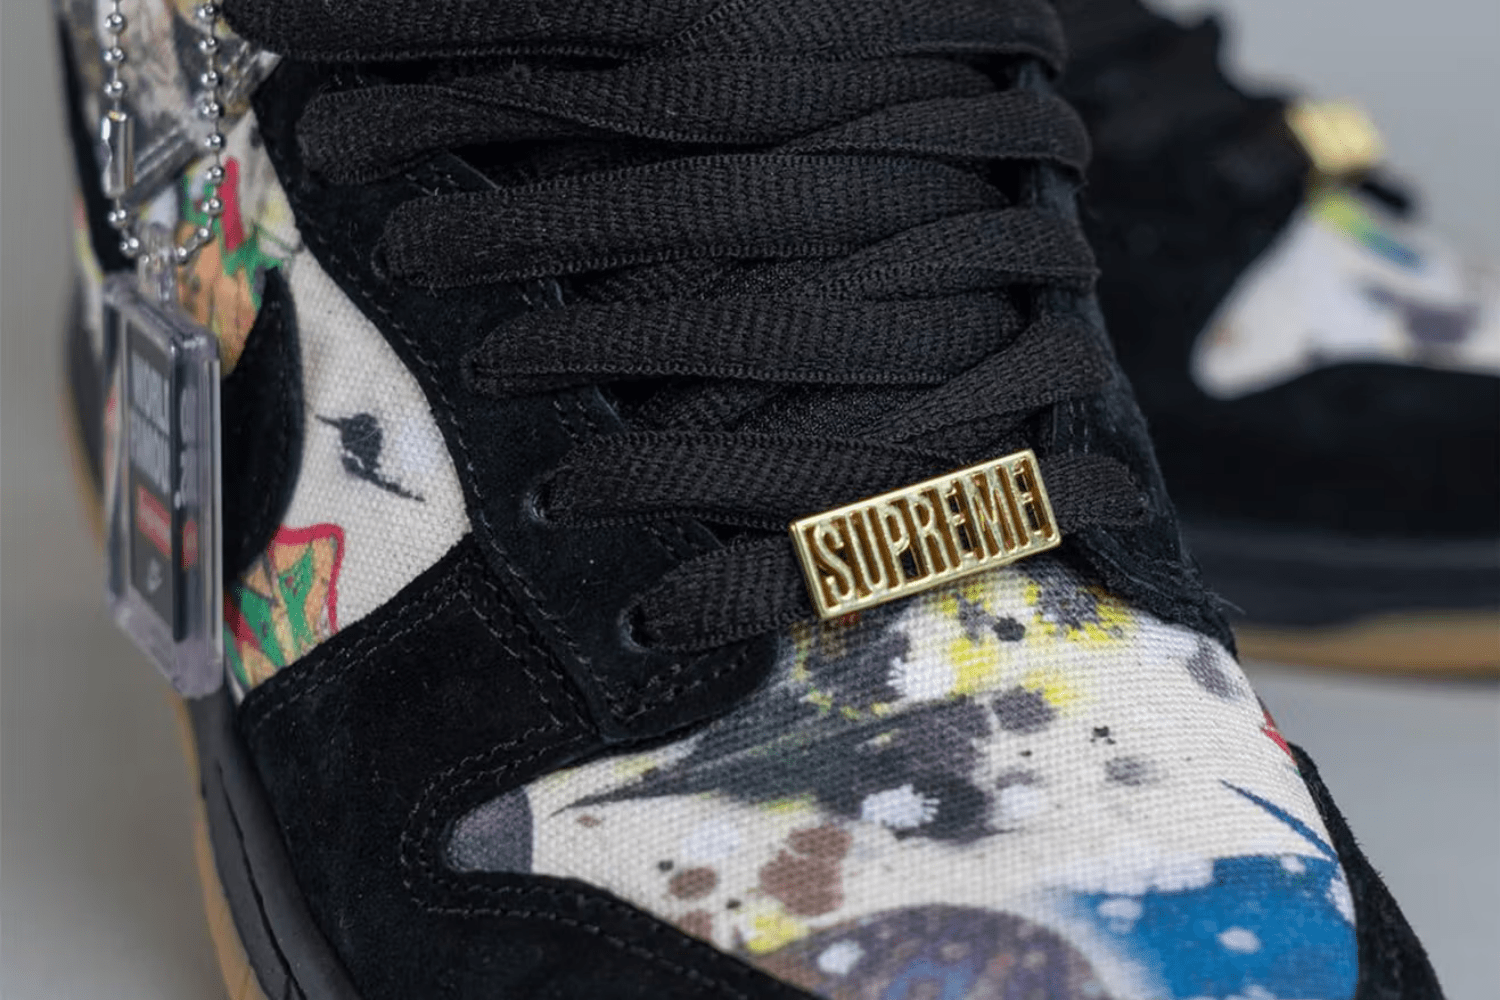 The Supreme x Nike SB Dunk 'Rammellzee' pack got a release date